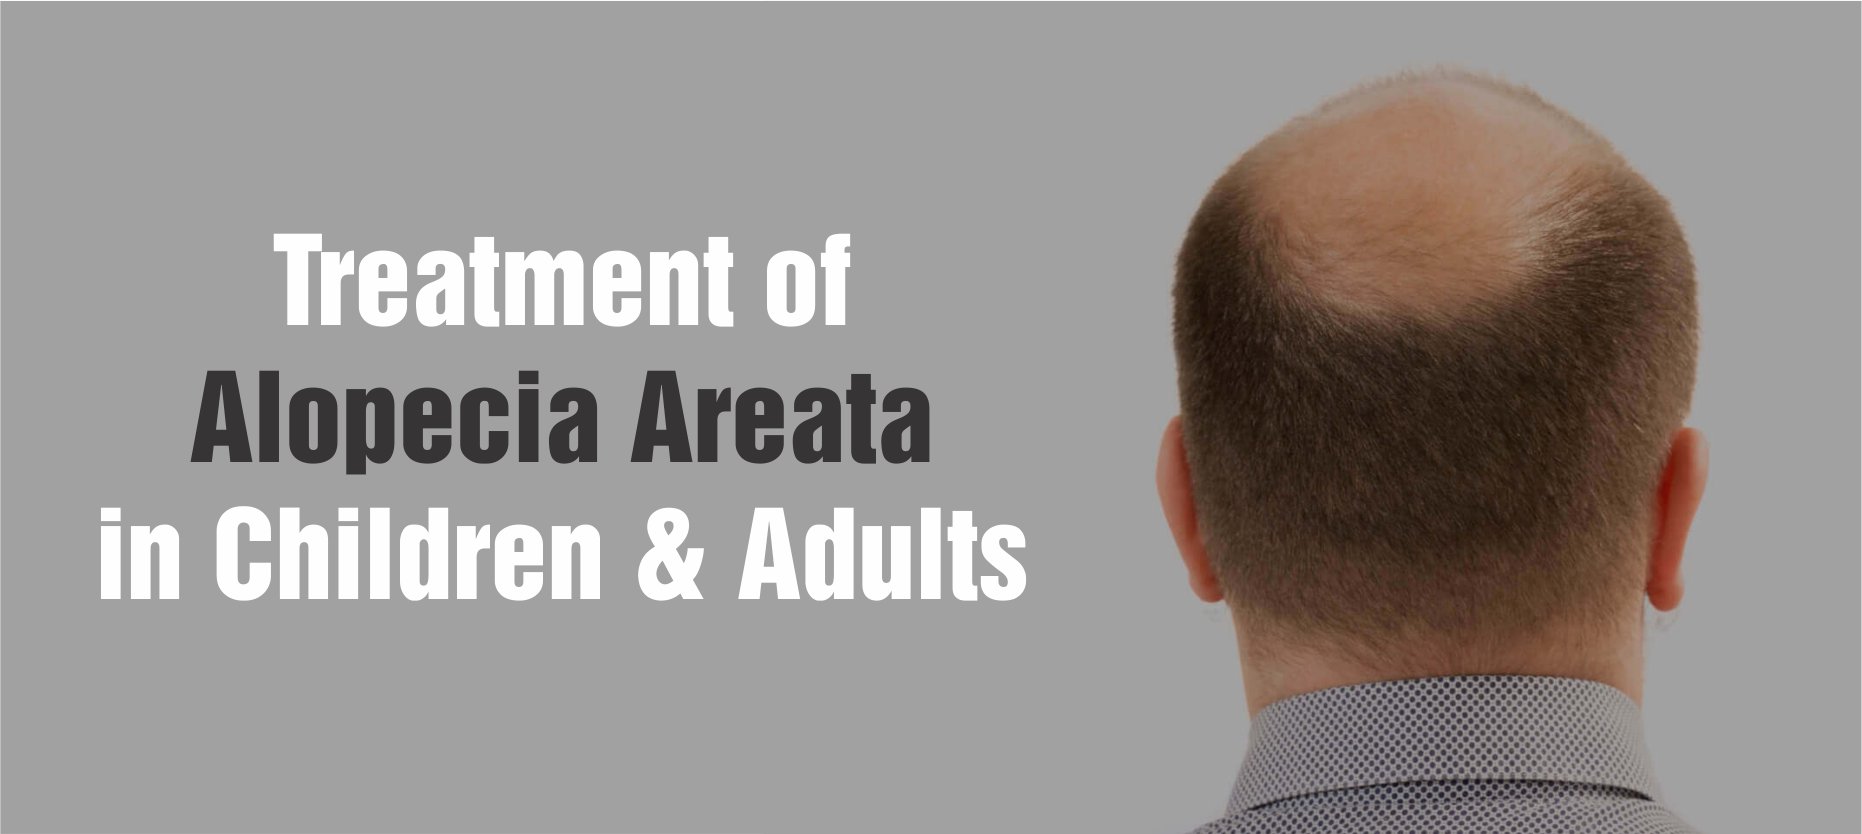 Best Ways To Treat Alopecia Areata